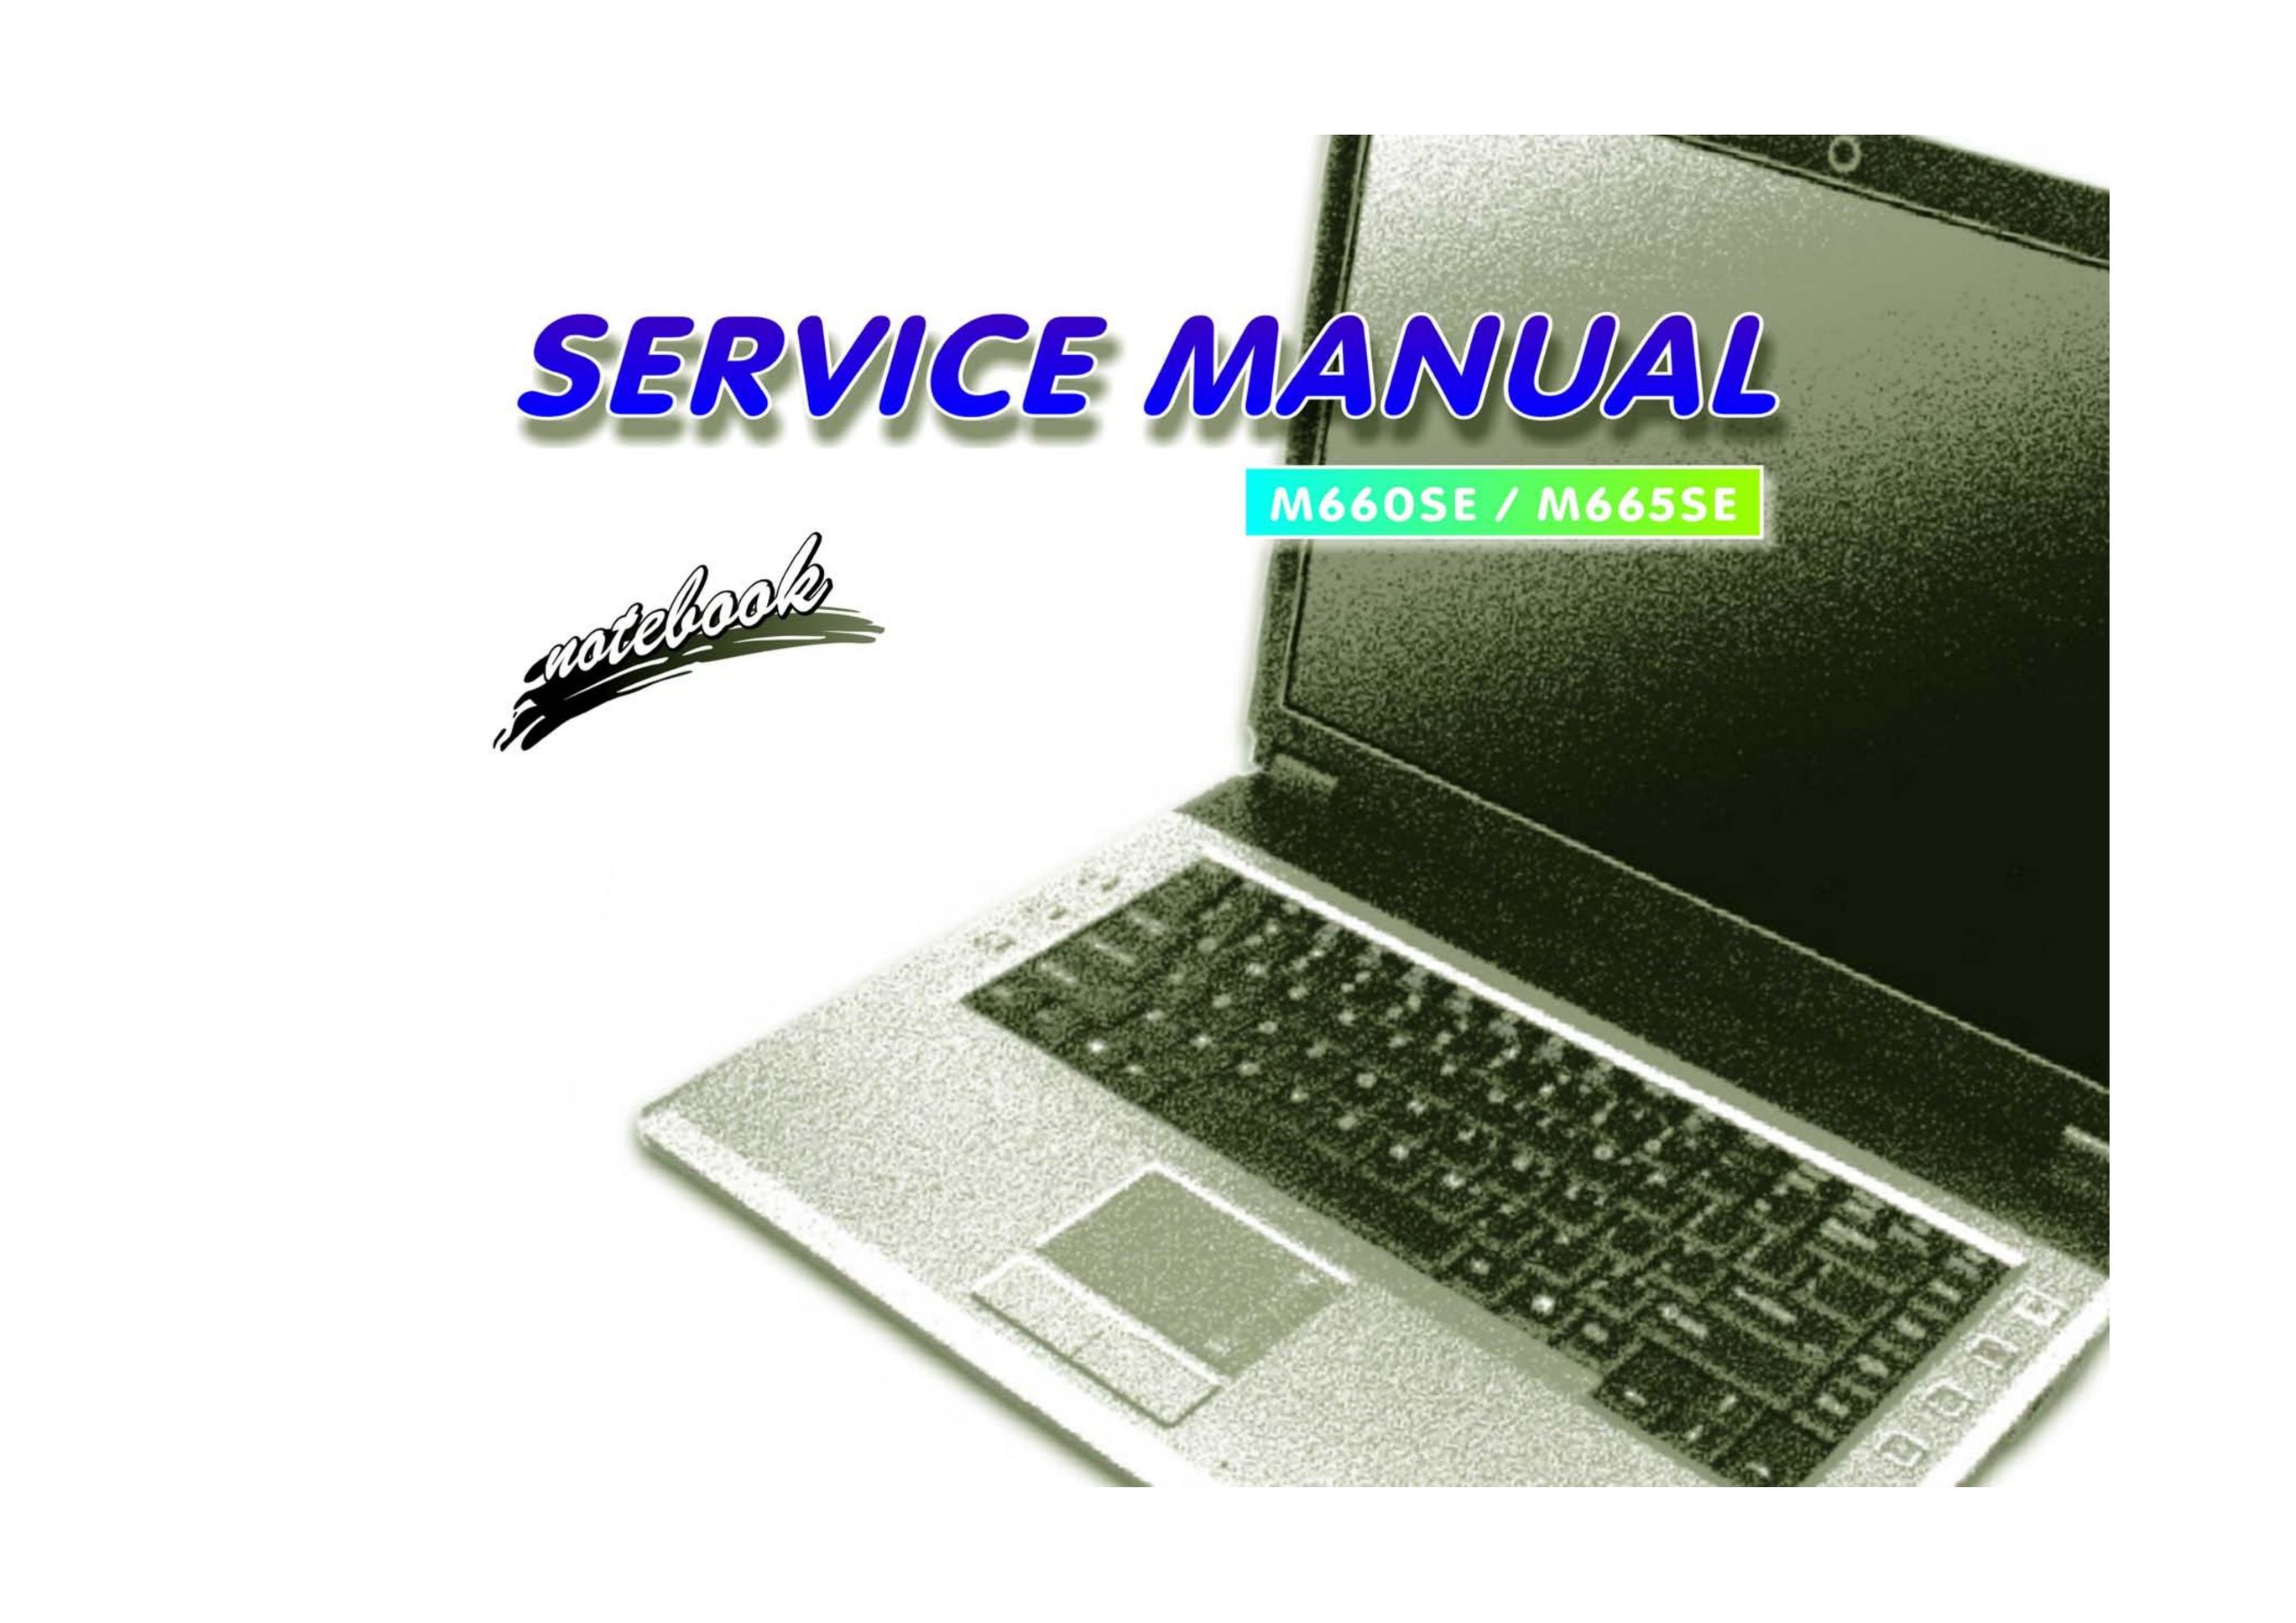 Clevo M665SE Laptop User Manual